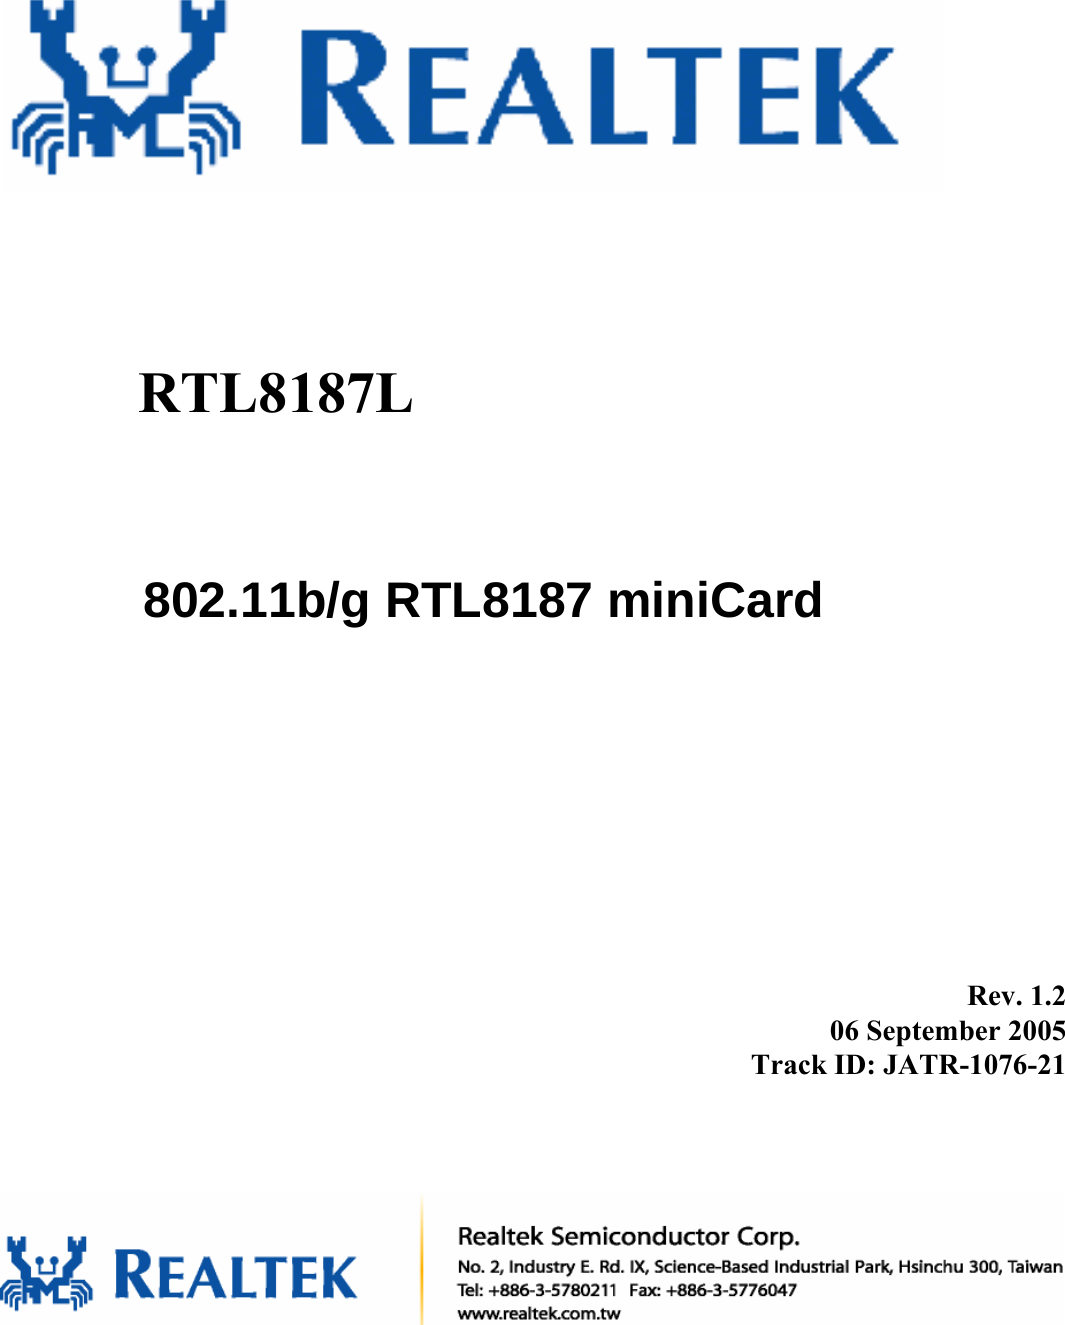                      802.11b/g RTL8187 miniCard         Rev. 1.2 06 September 2005 Track ID: JATR-1076-21             RTL8187L  